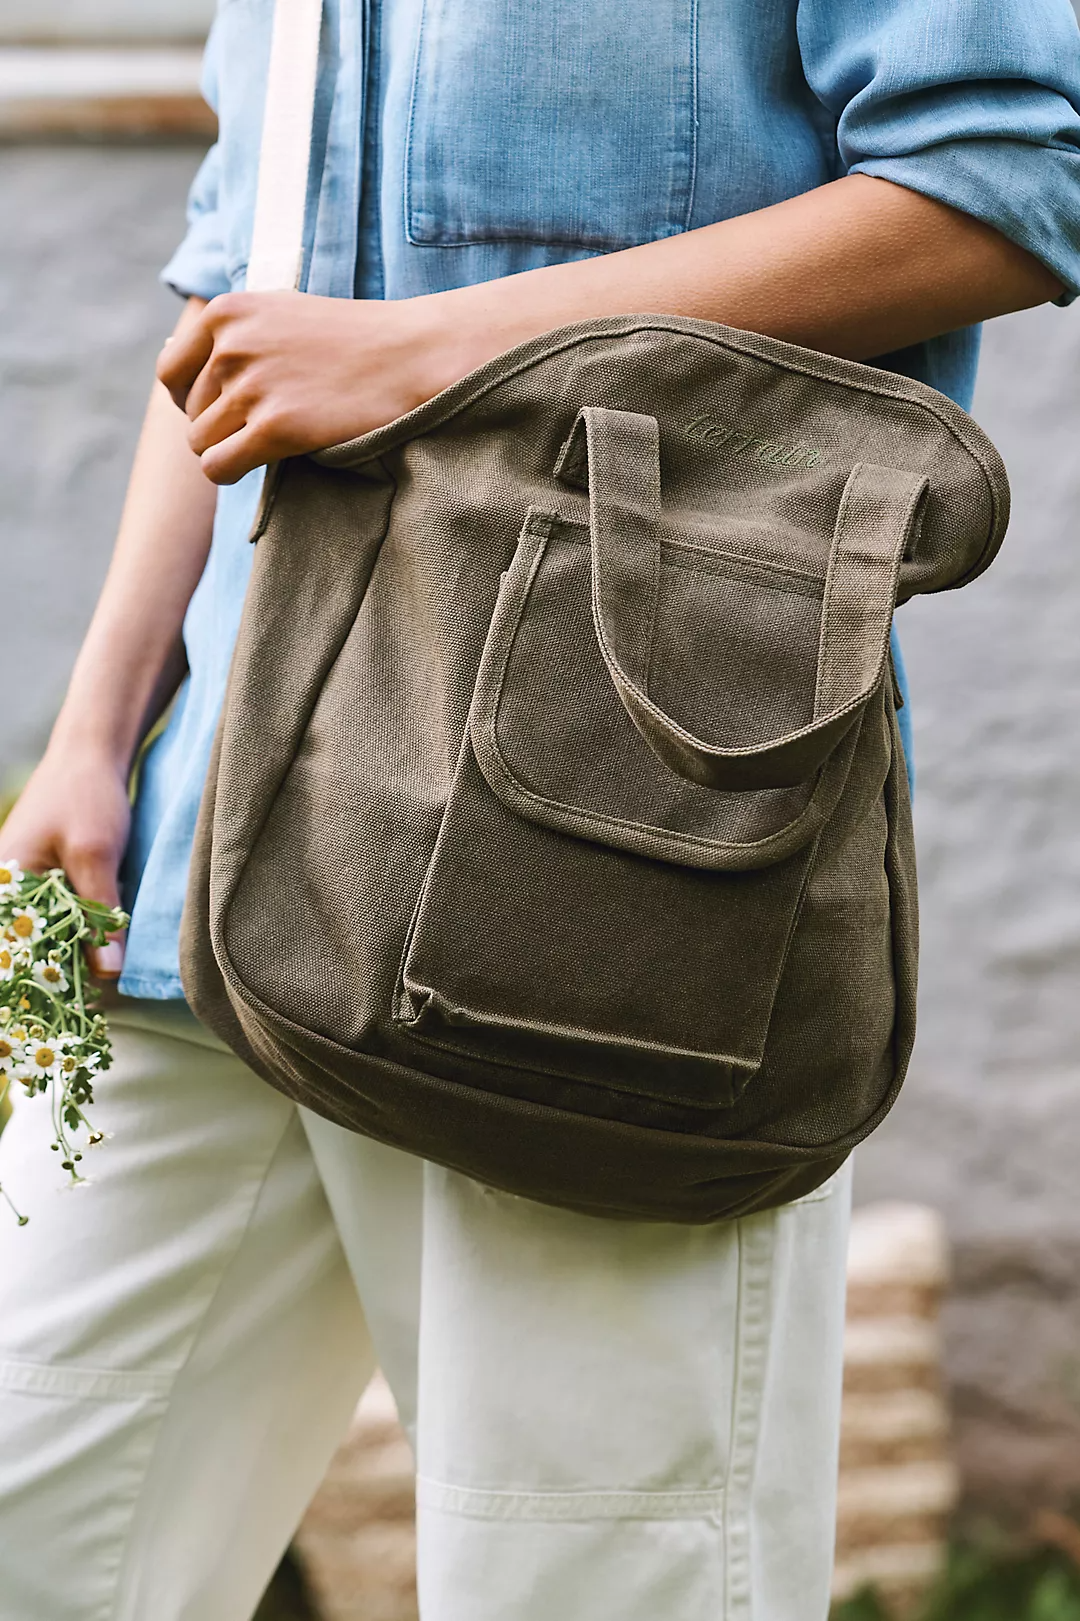 21 Best Messenger Bags For Work, Travel, & School